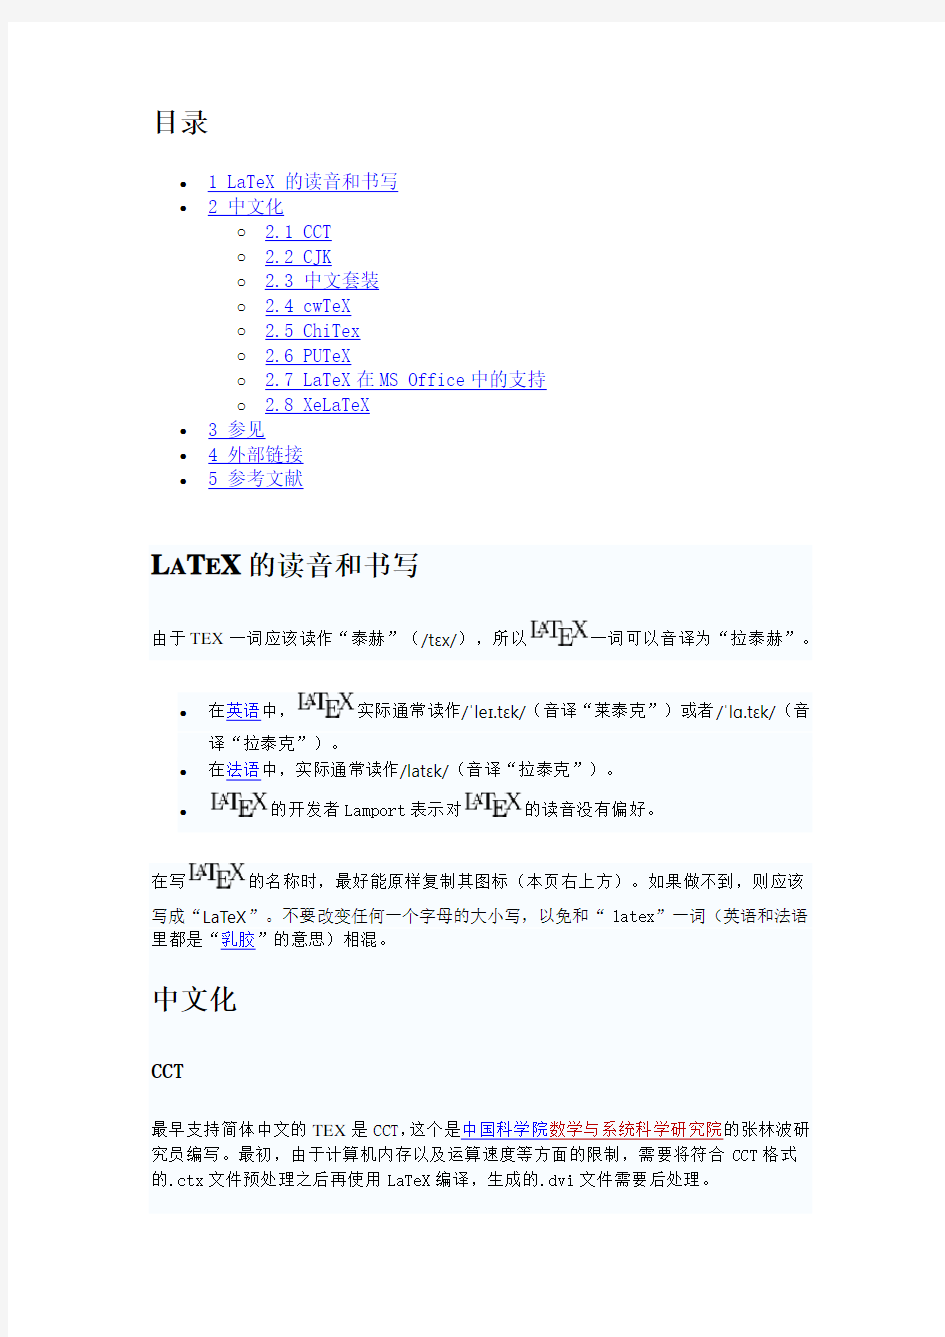 LATEX排版软件介绍